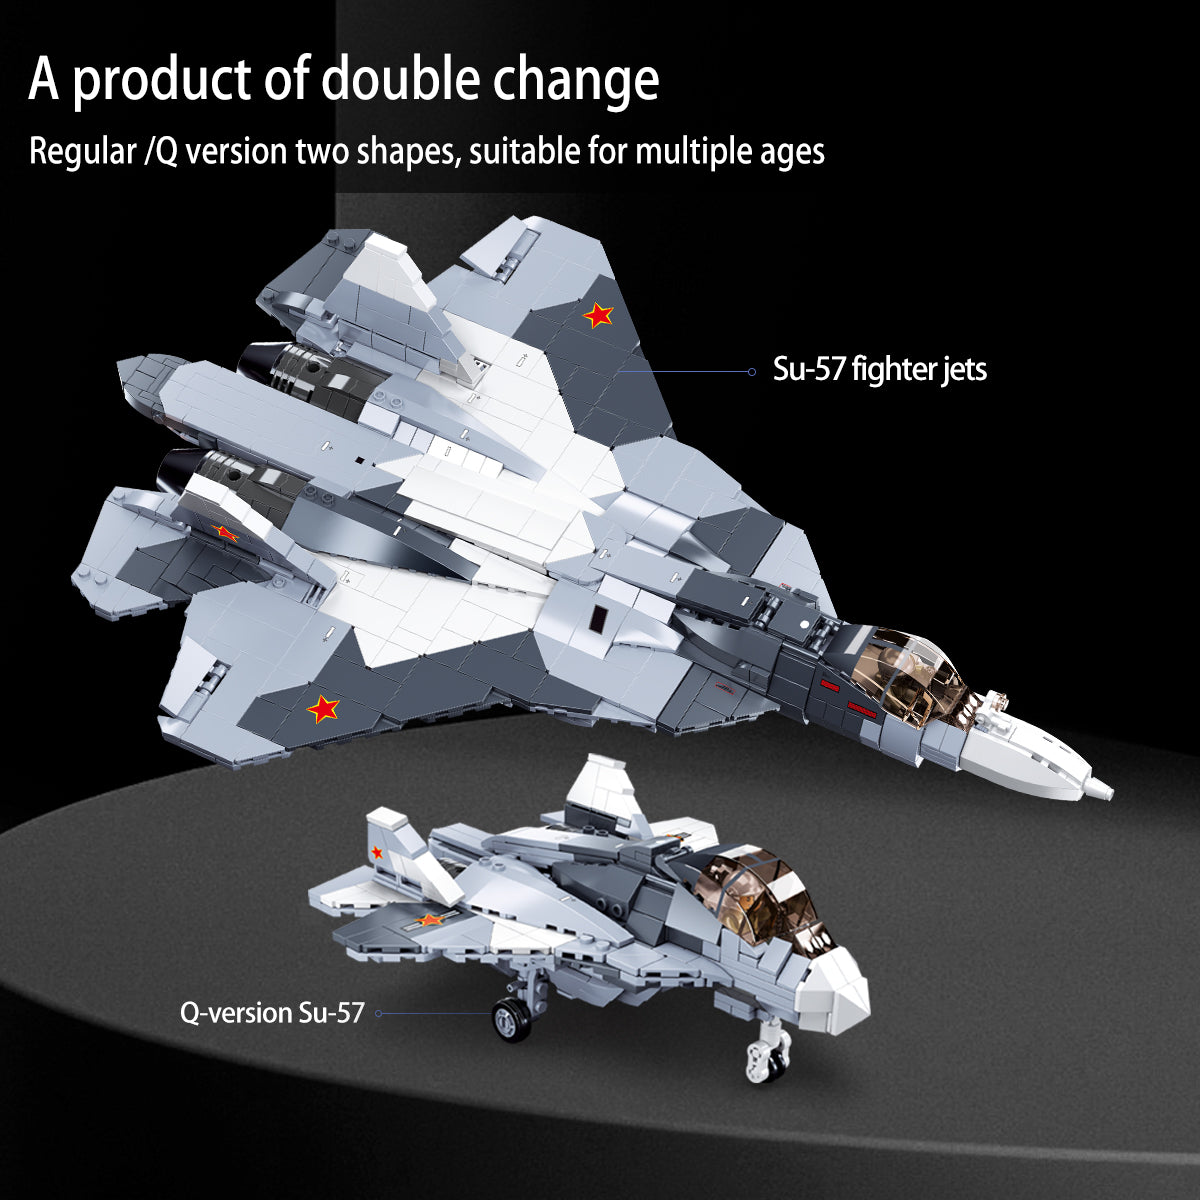 DAHONPA Military Series Su-57 Felon Fighter Building Blocks Set with 893 Pieces